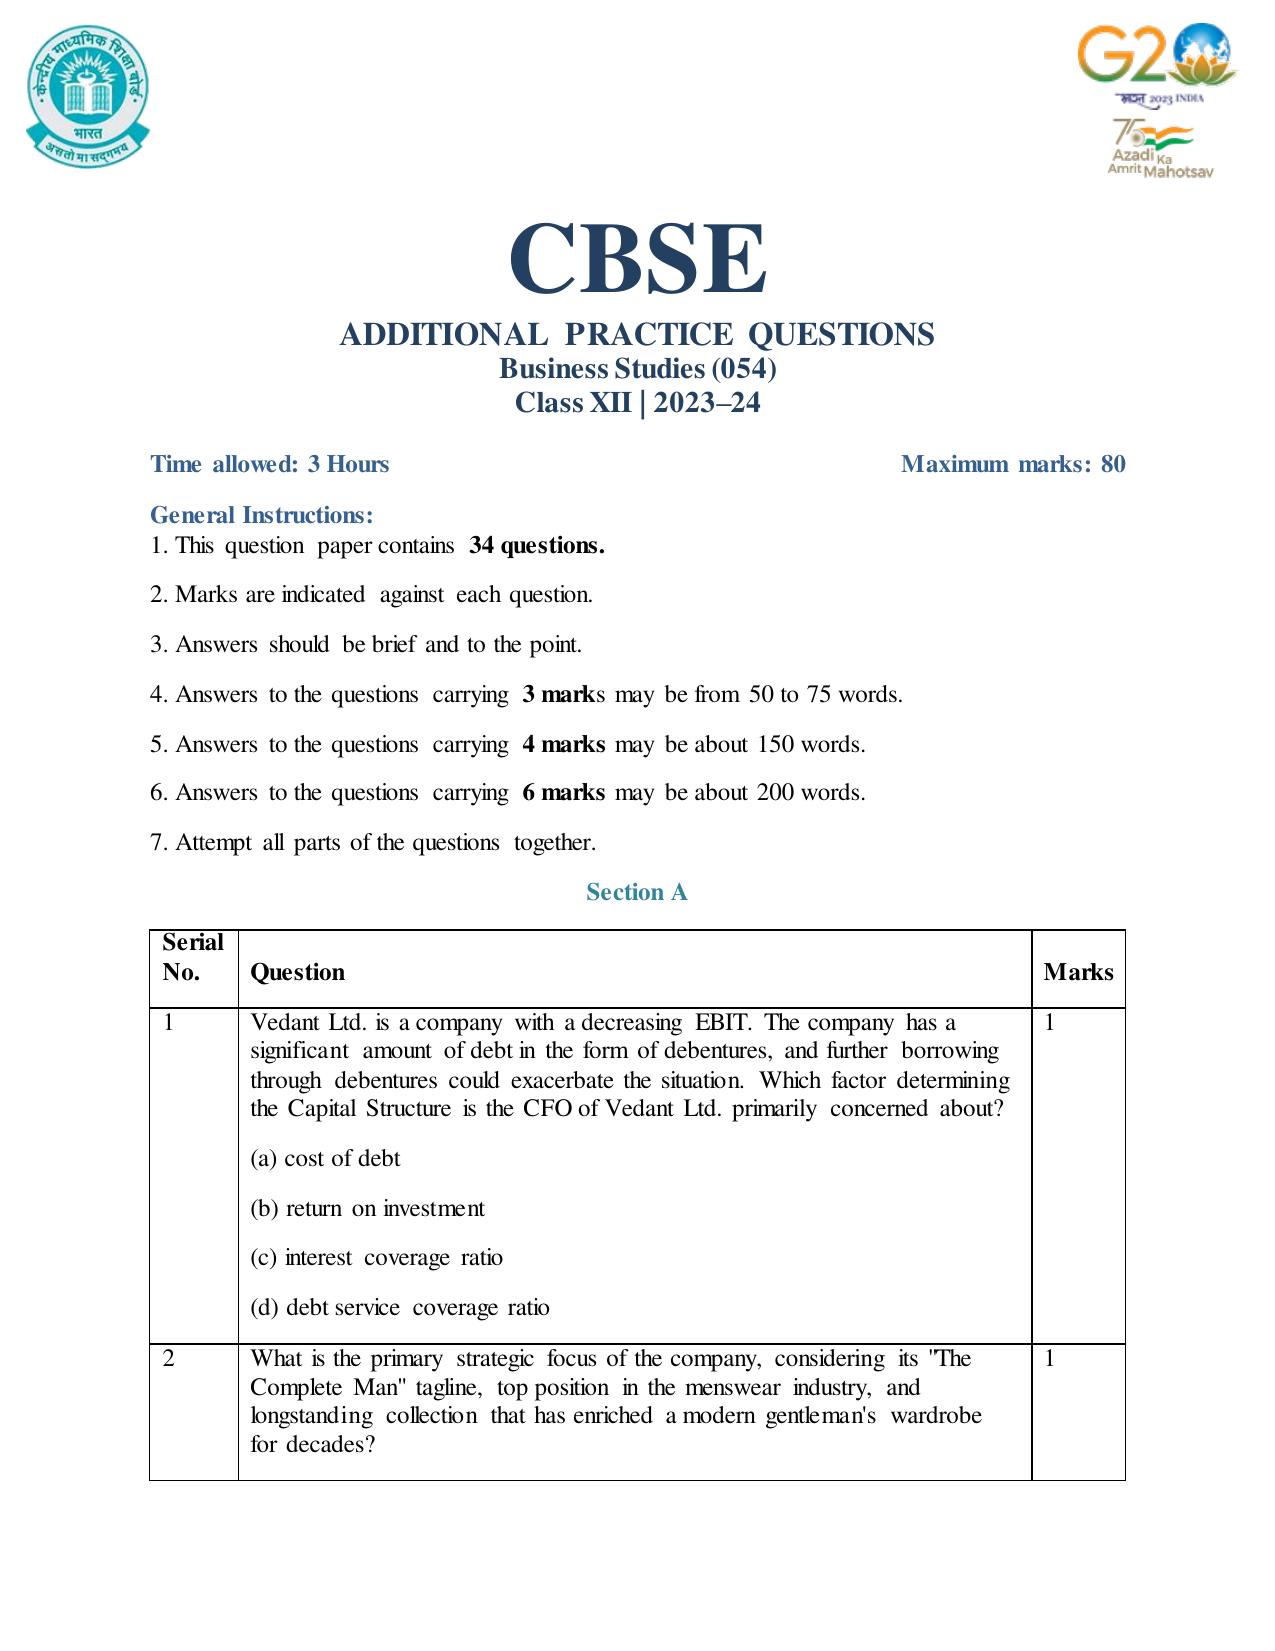 CBSE Class 12 Business Studies SET 1 Practice Questions 2023-24  - Page 1